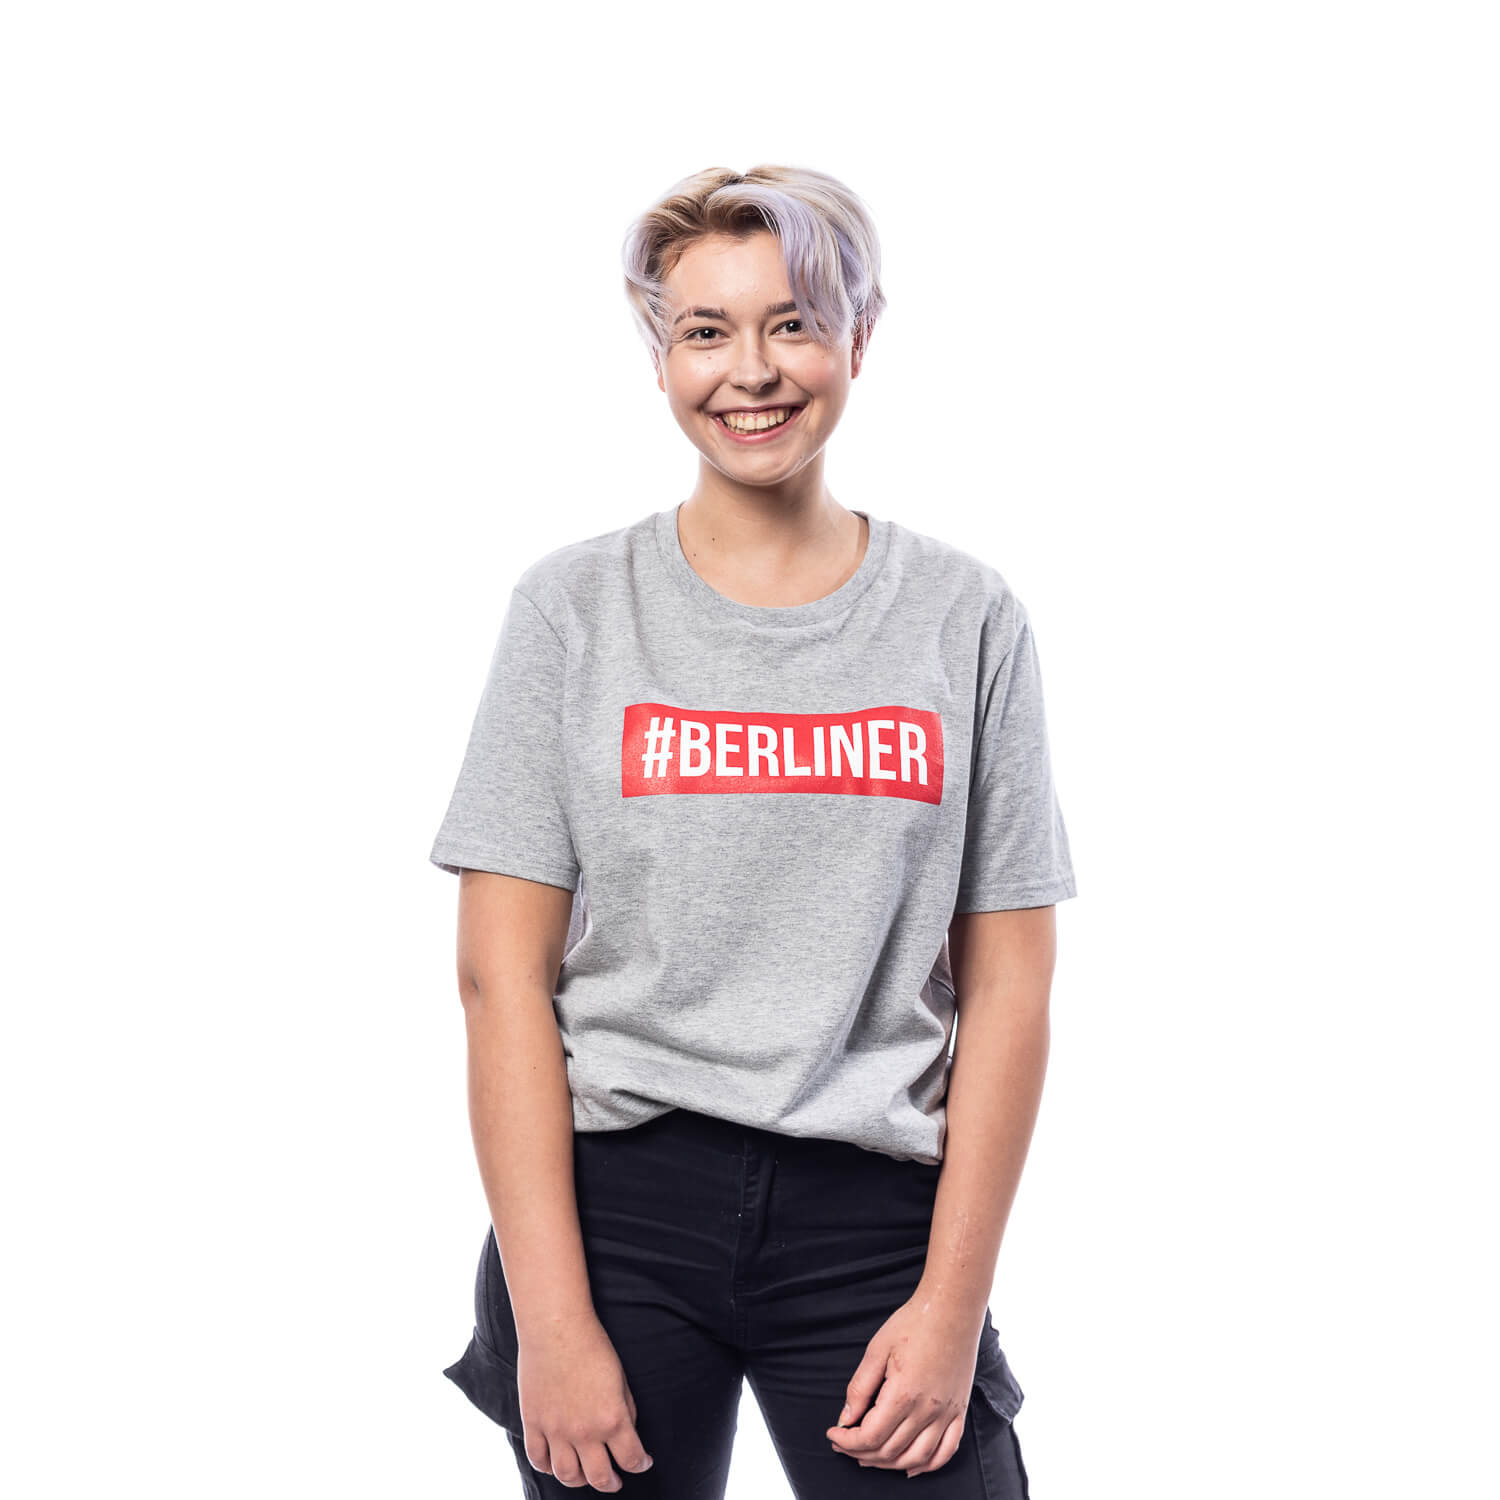 Berliner Pilsner T-Shirt, Motiv #BERLINER, hellgrau, Gr. S